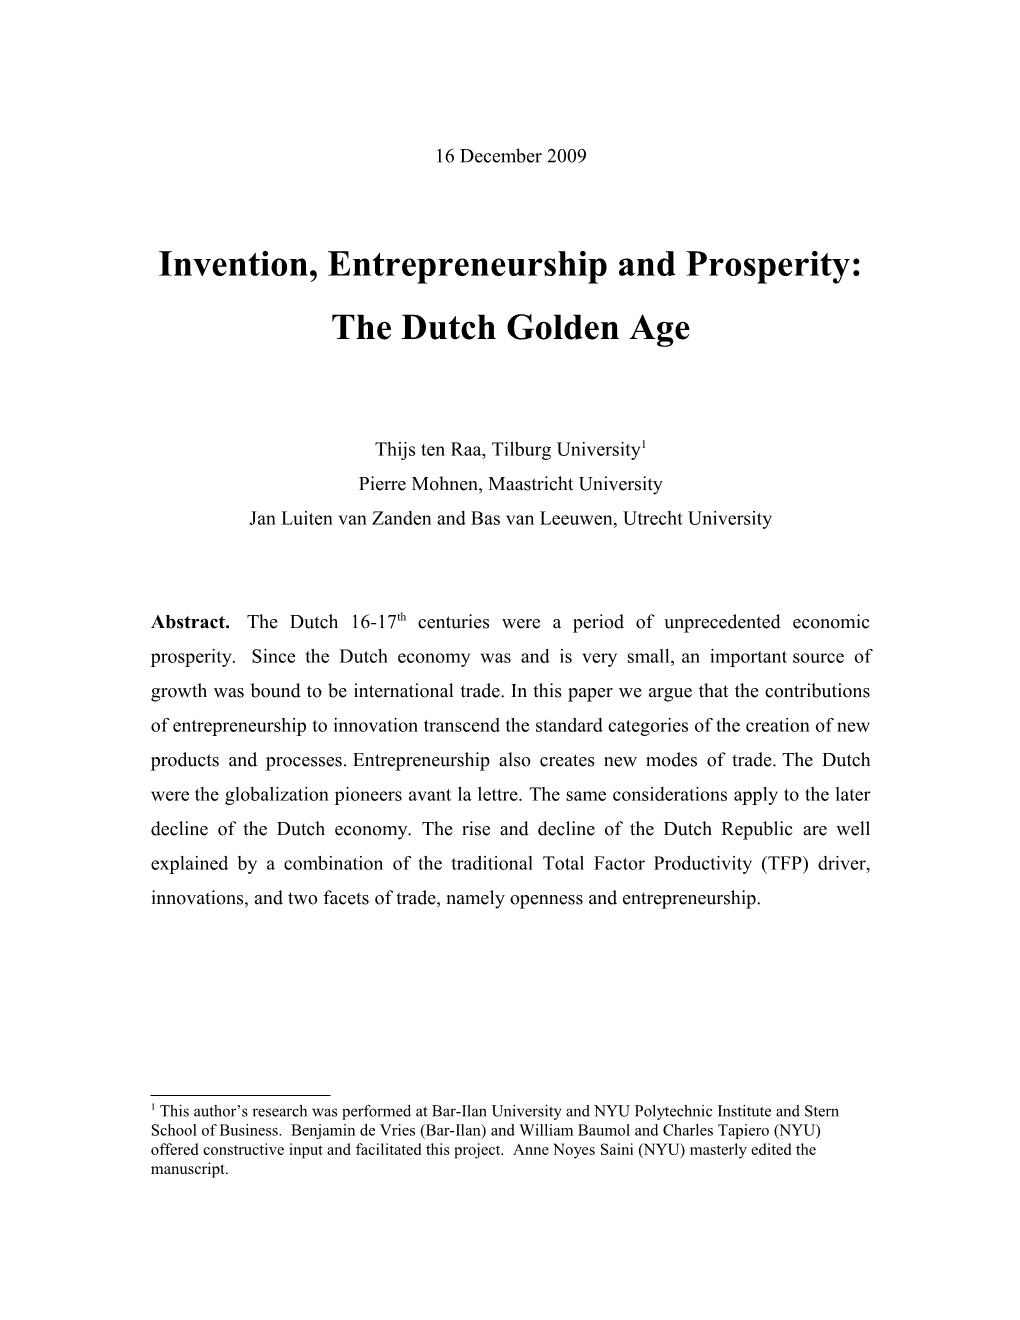 Invention, Entrepreneurship and Prosperity: the Dutch Golden Age